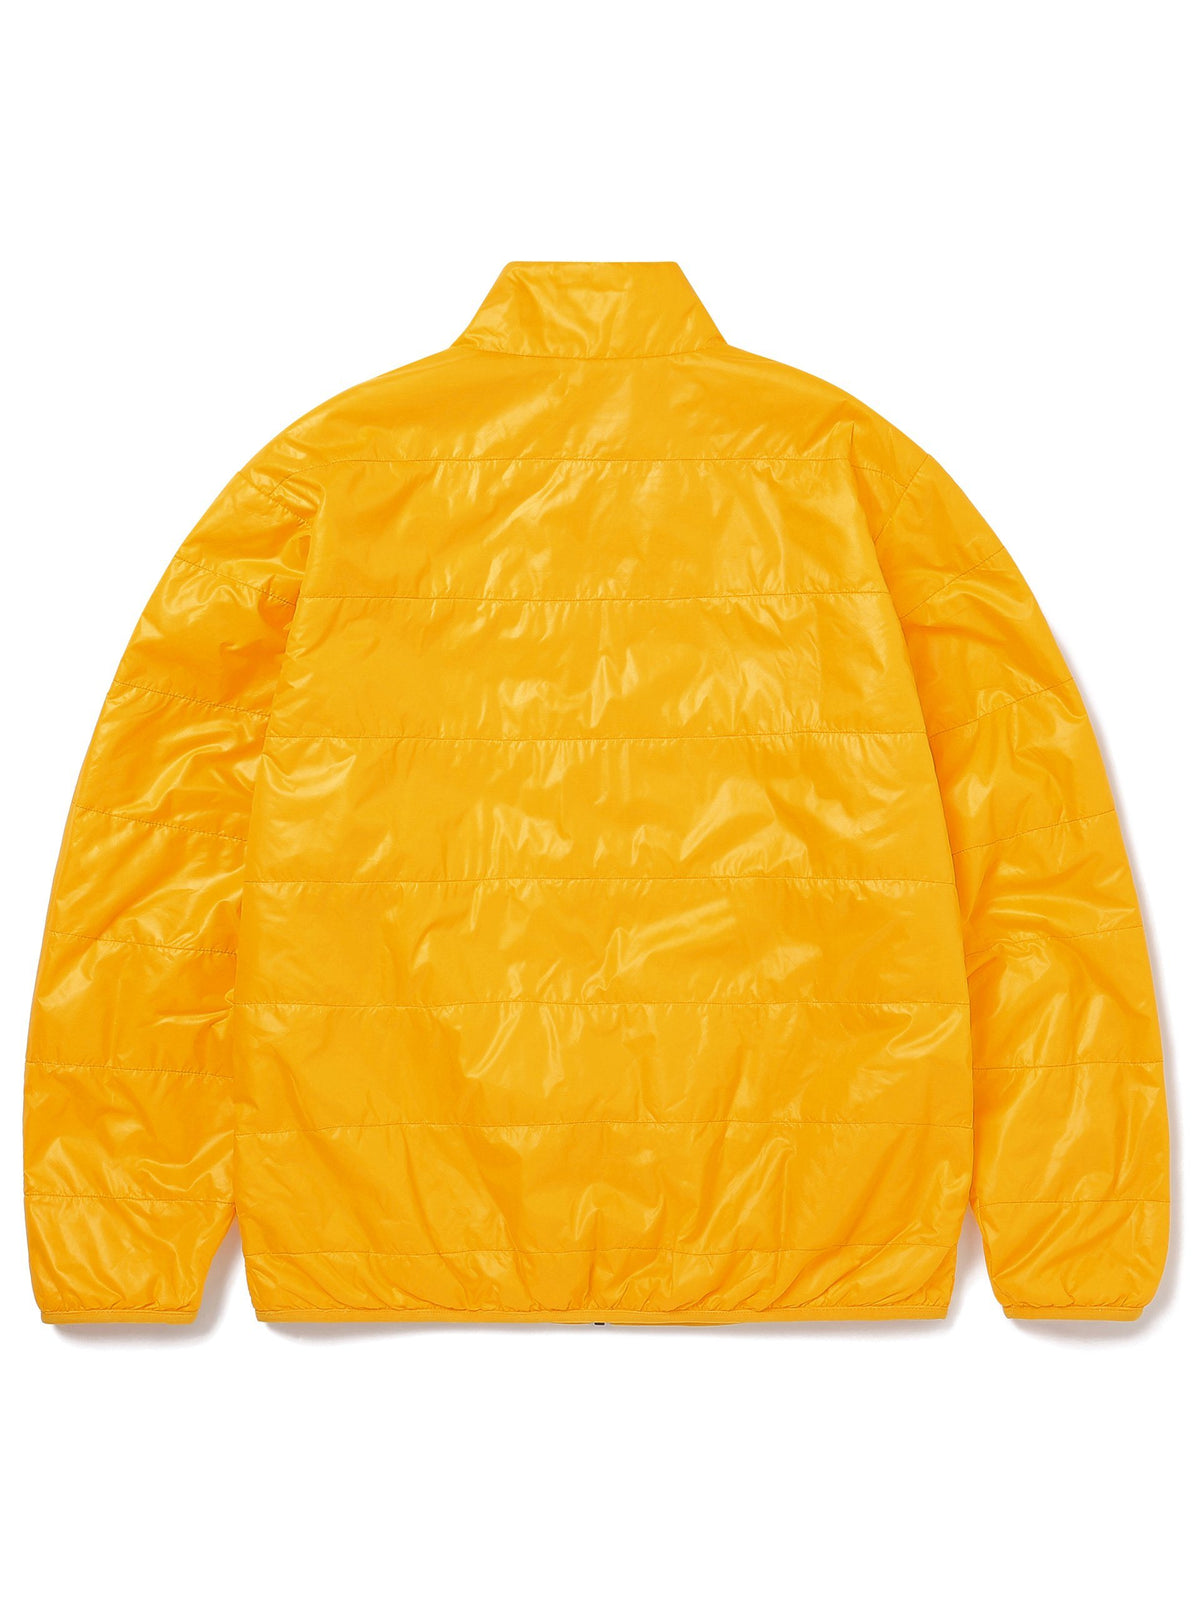 PERTEX® SP Reversible Jacket Outerwear 